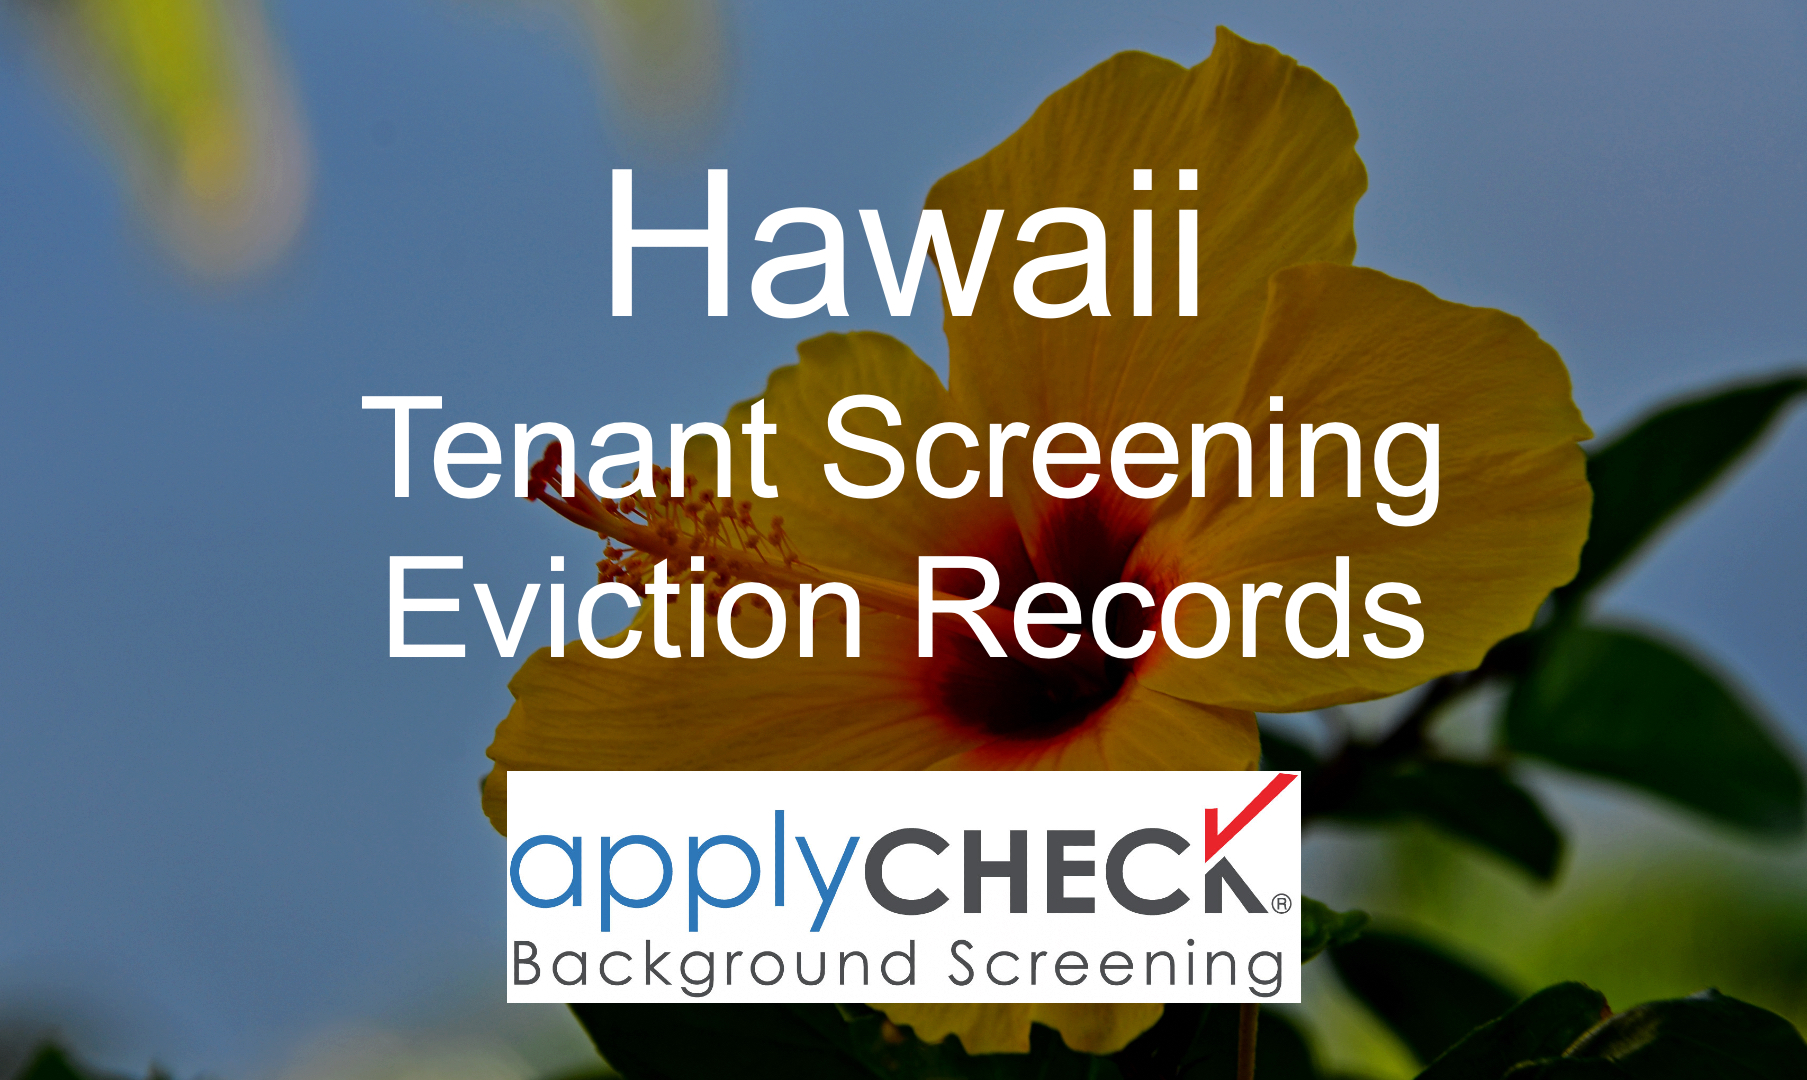 Hawaii Tenant Screening and Eviction image